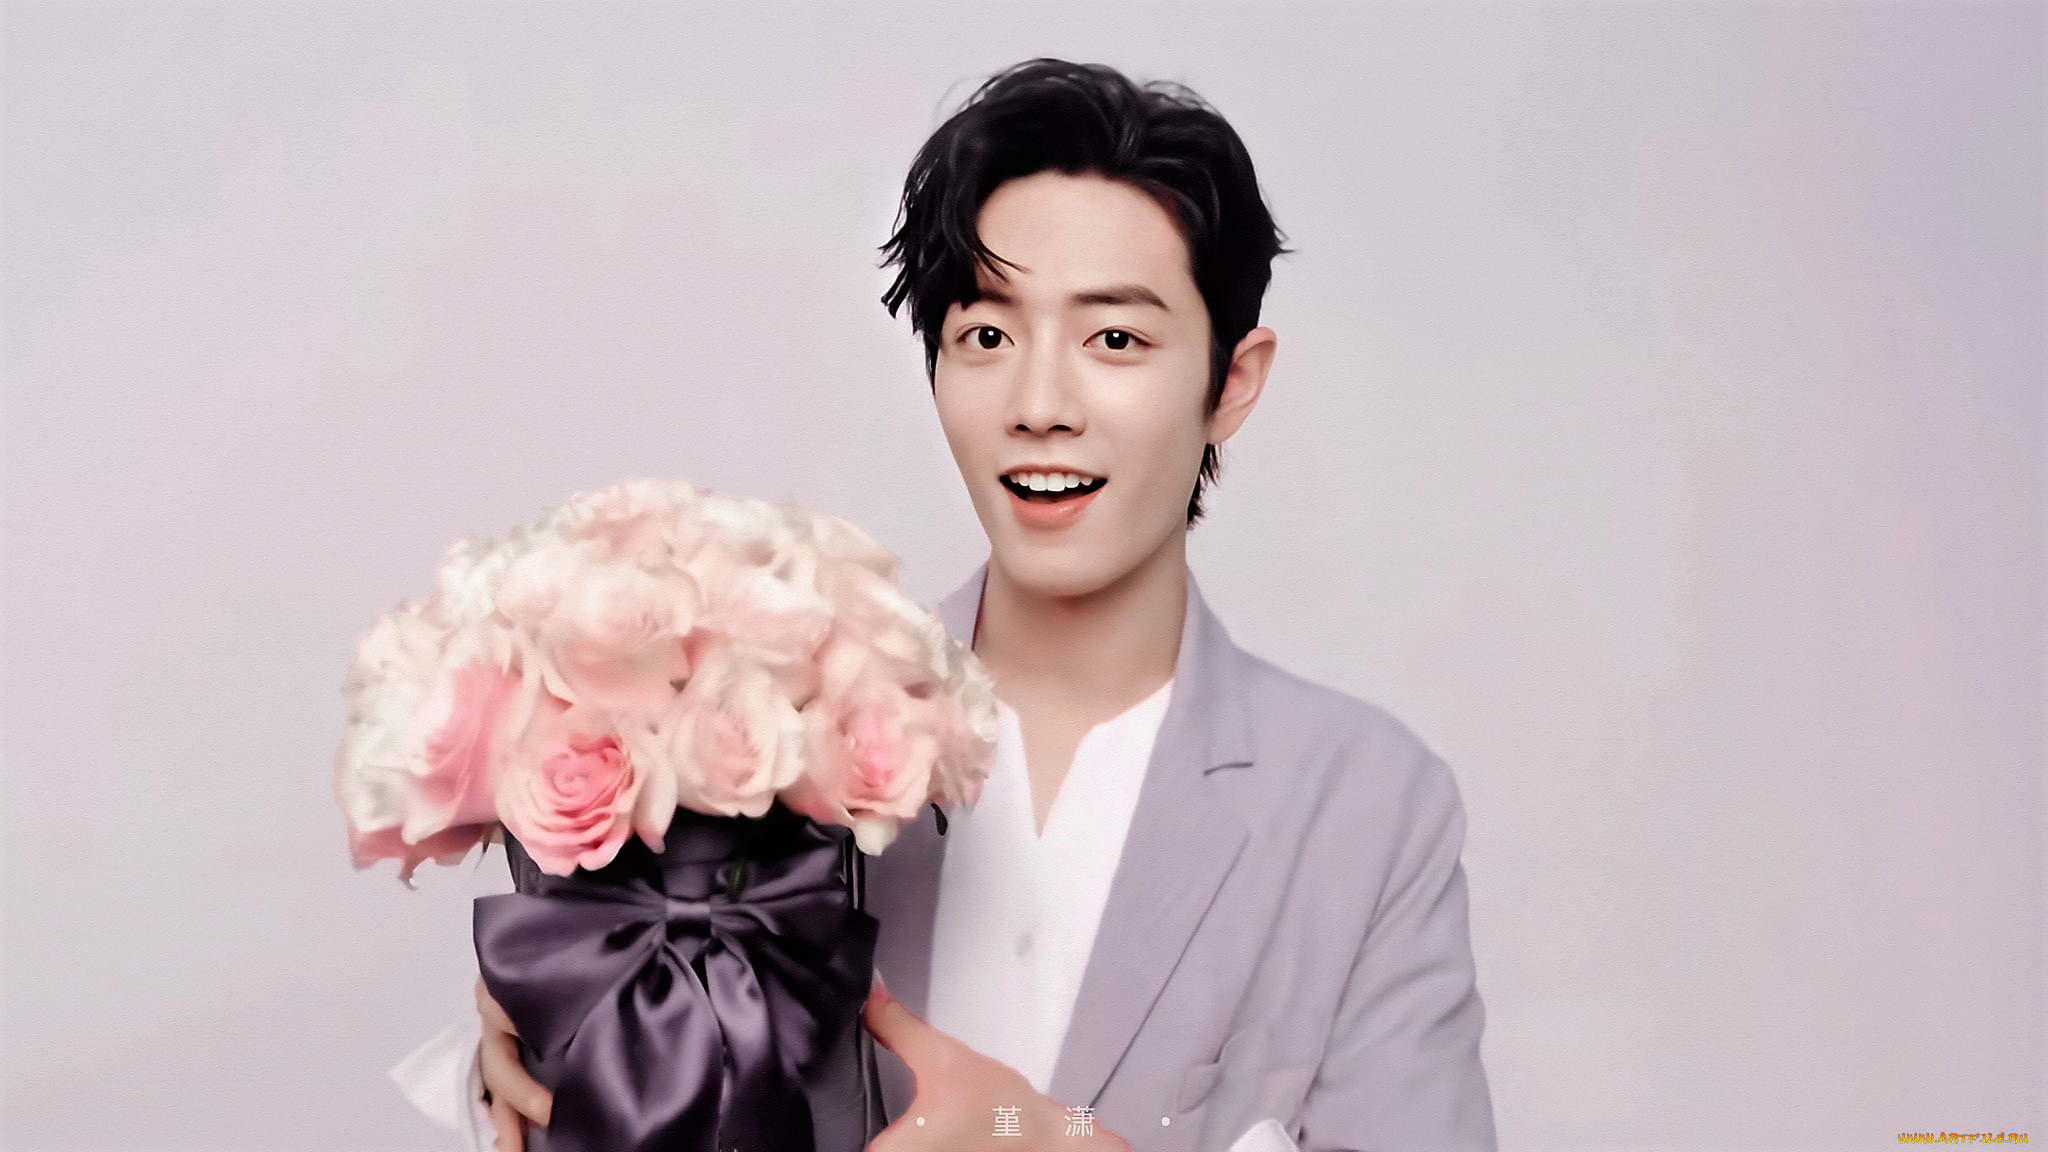 мужчины, xiao, zhan, актер, пиджак, коробка, розы, цветы